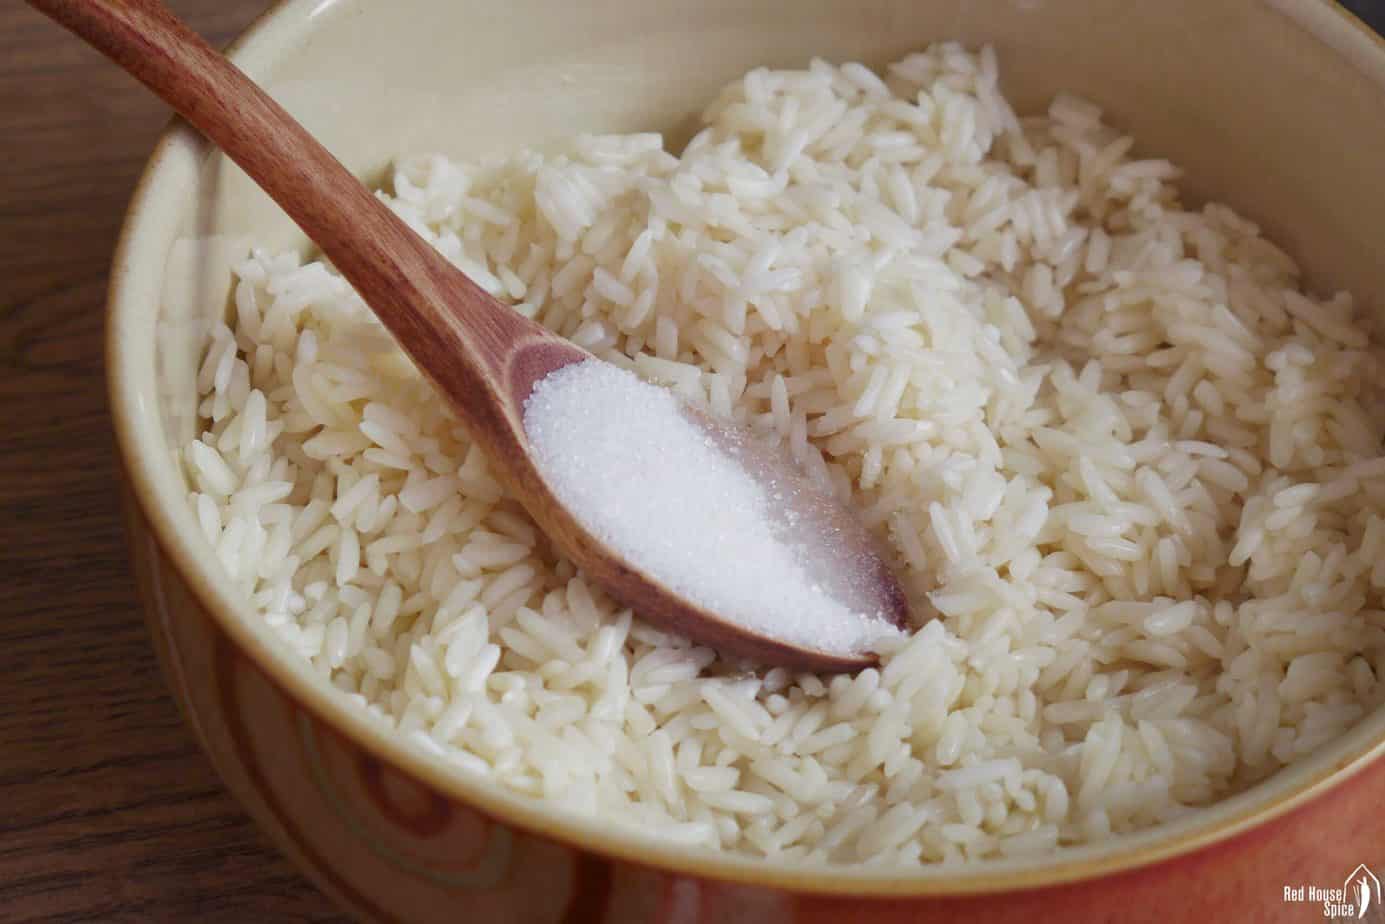 Add sugar to rice